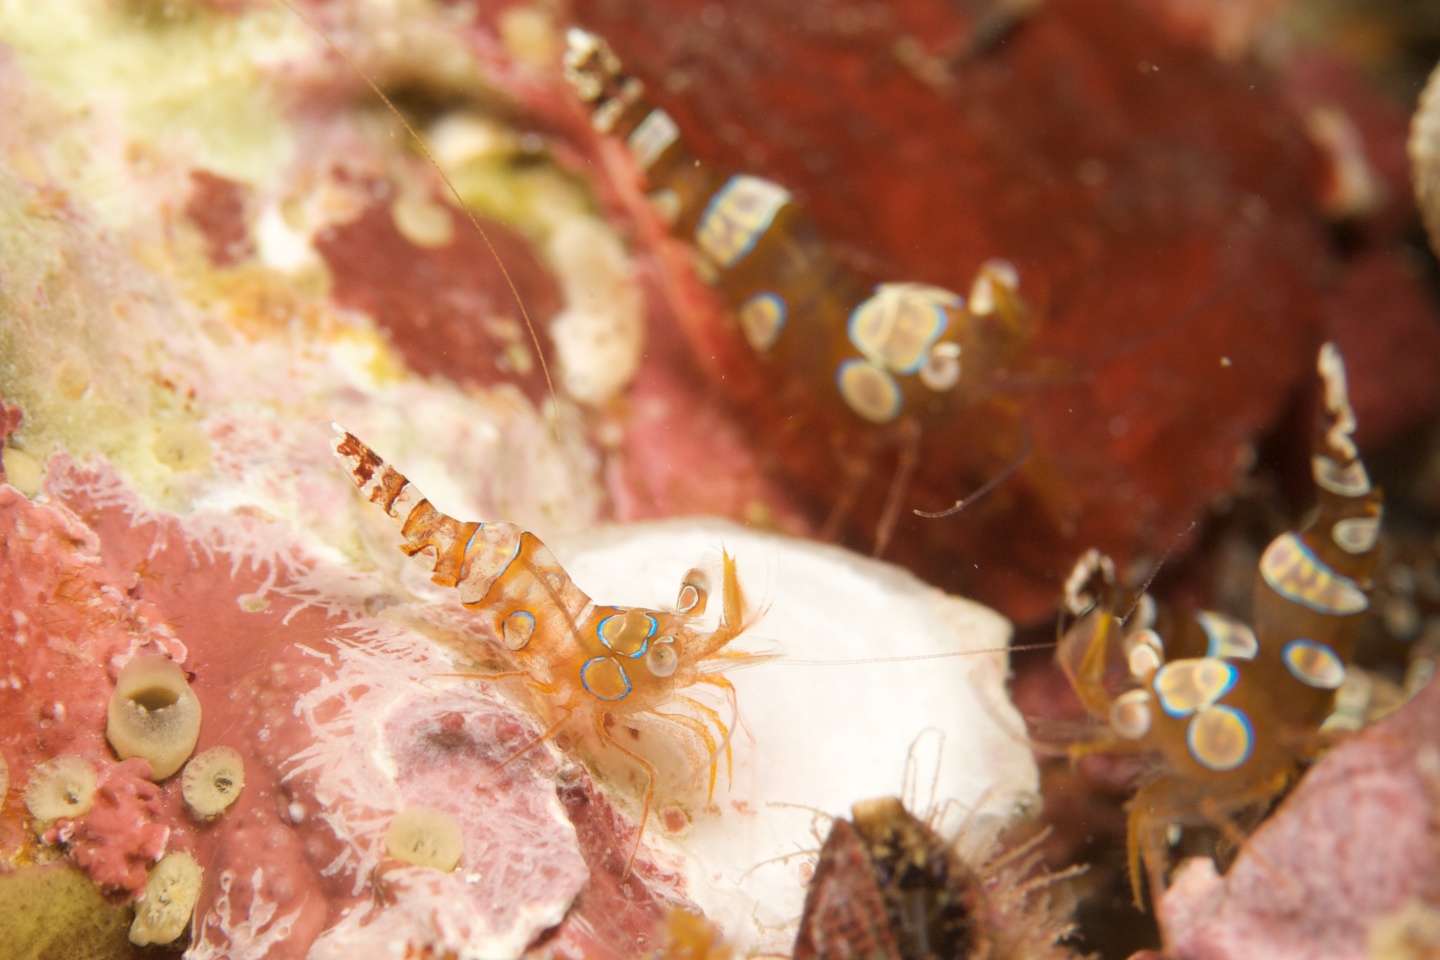 Squat shrimp